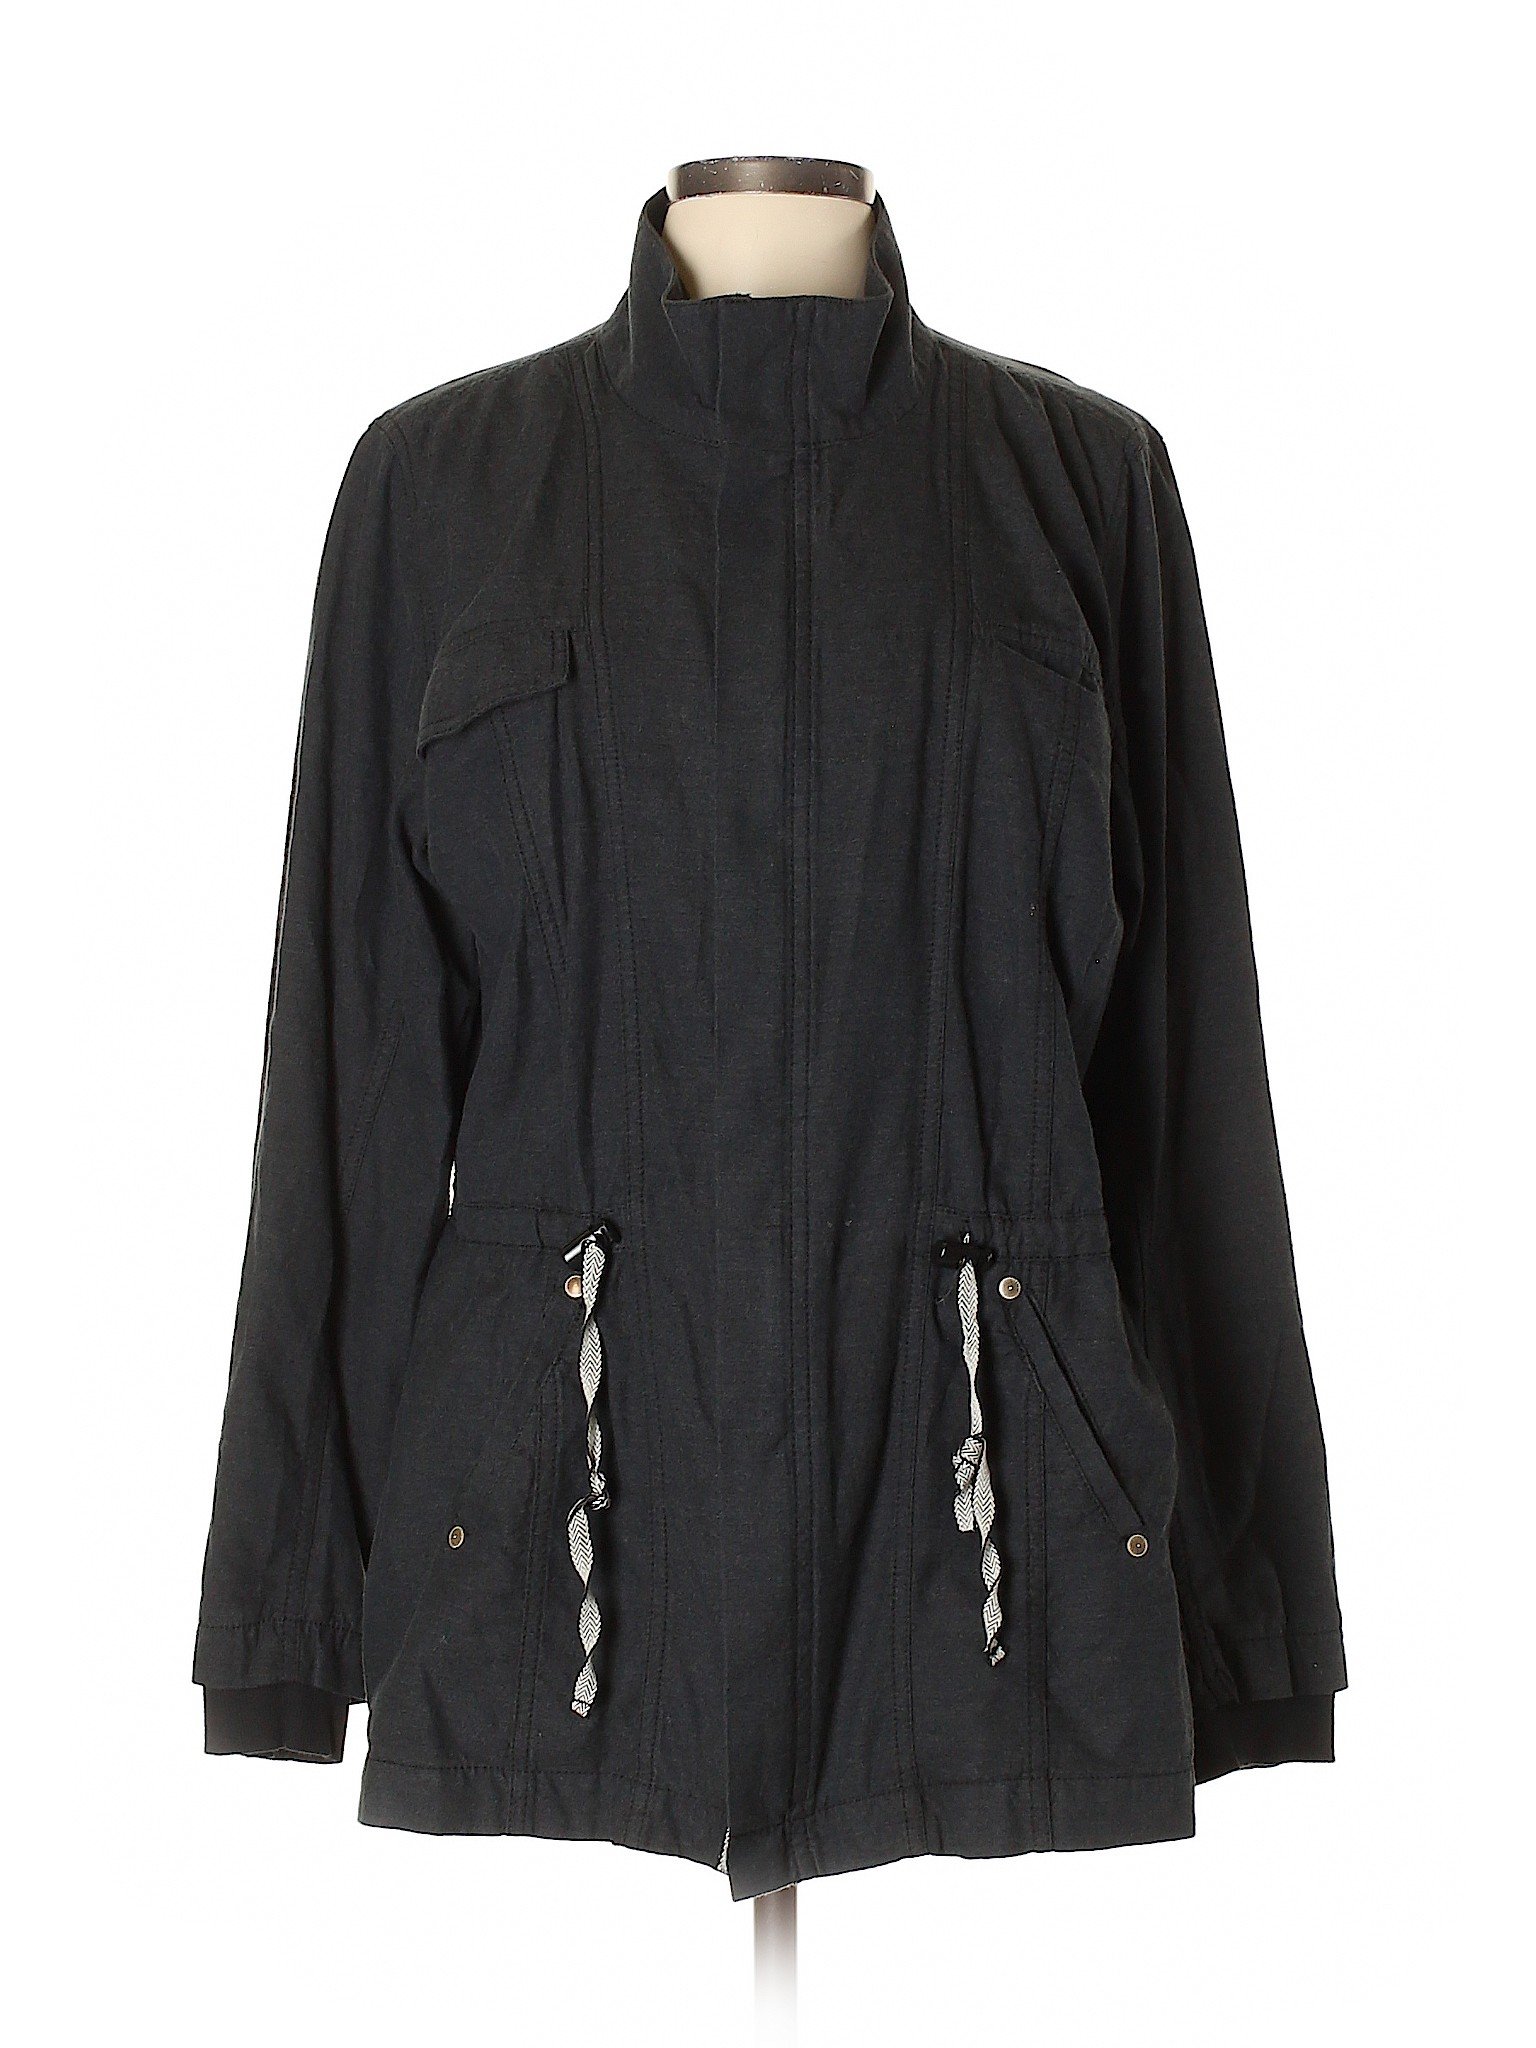 CAbi 100% Cotton Black Jacket Size L - 72% off | thredUP